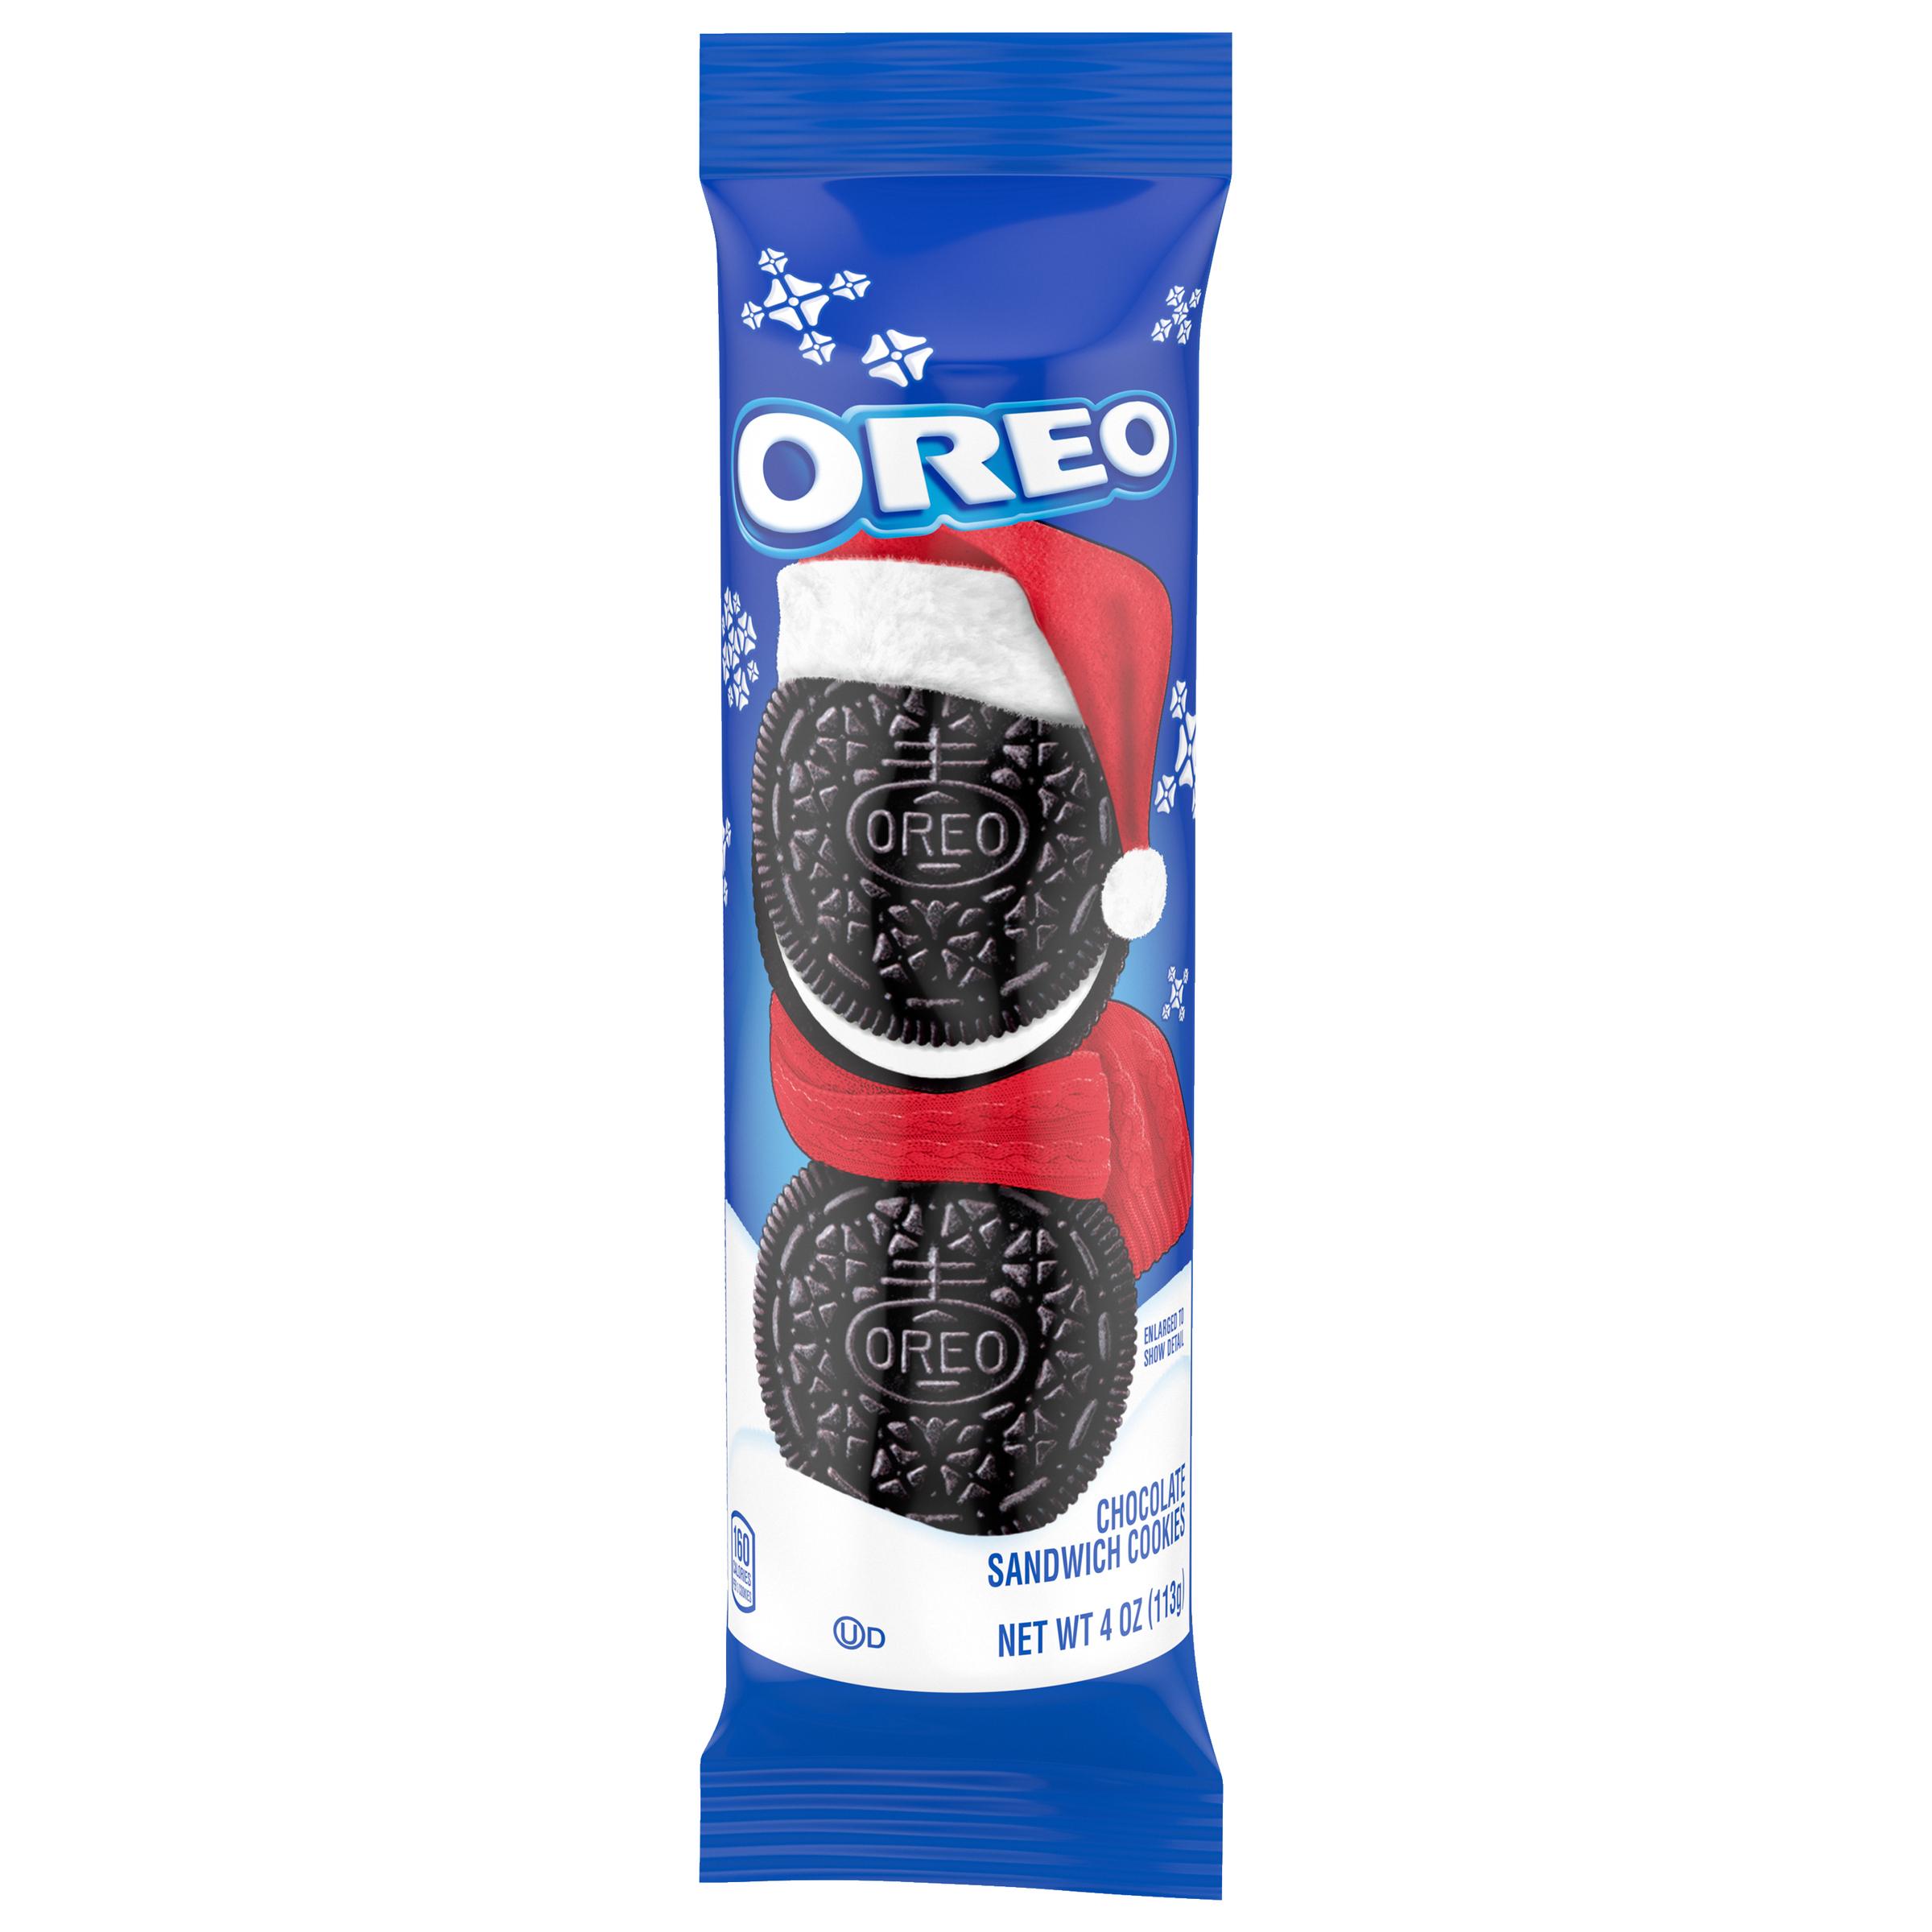 OREO Original Cookies 4 oz